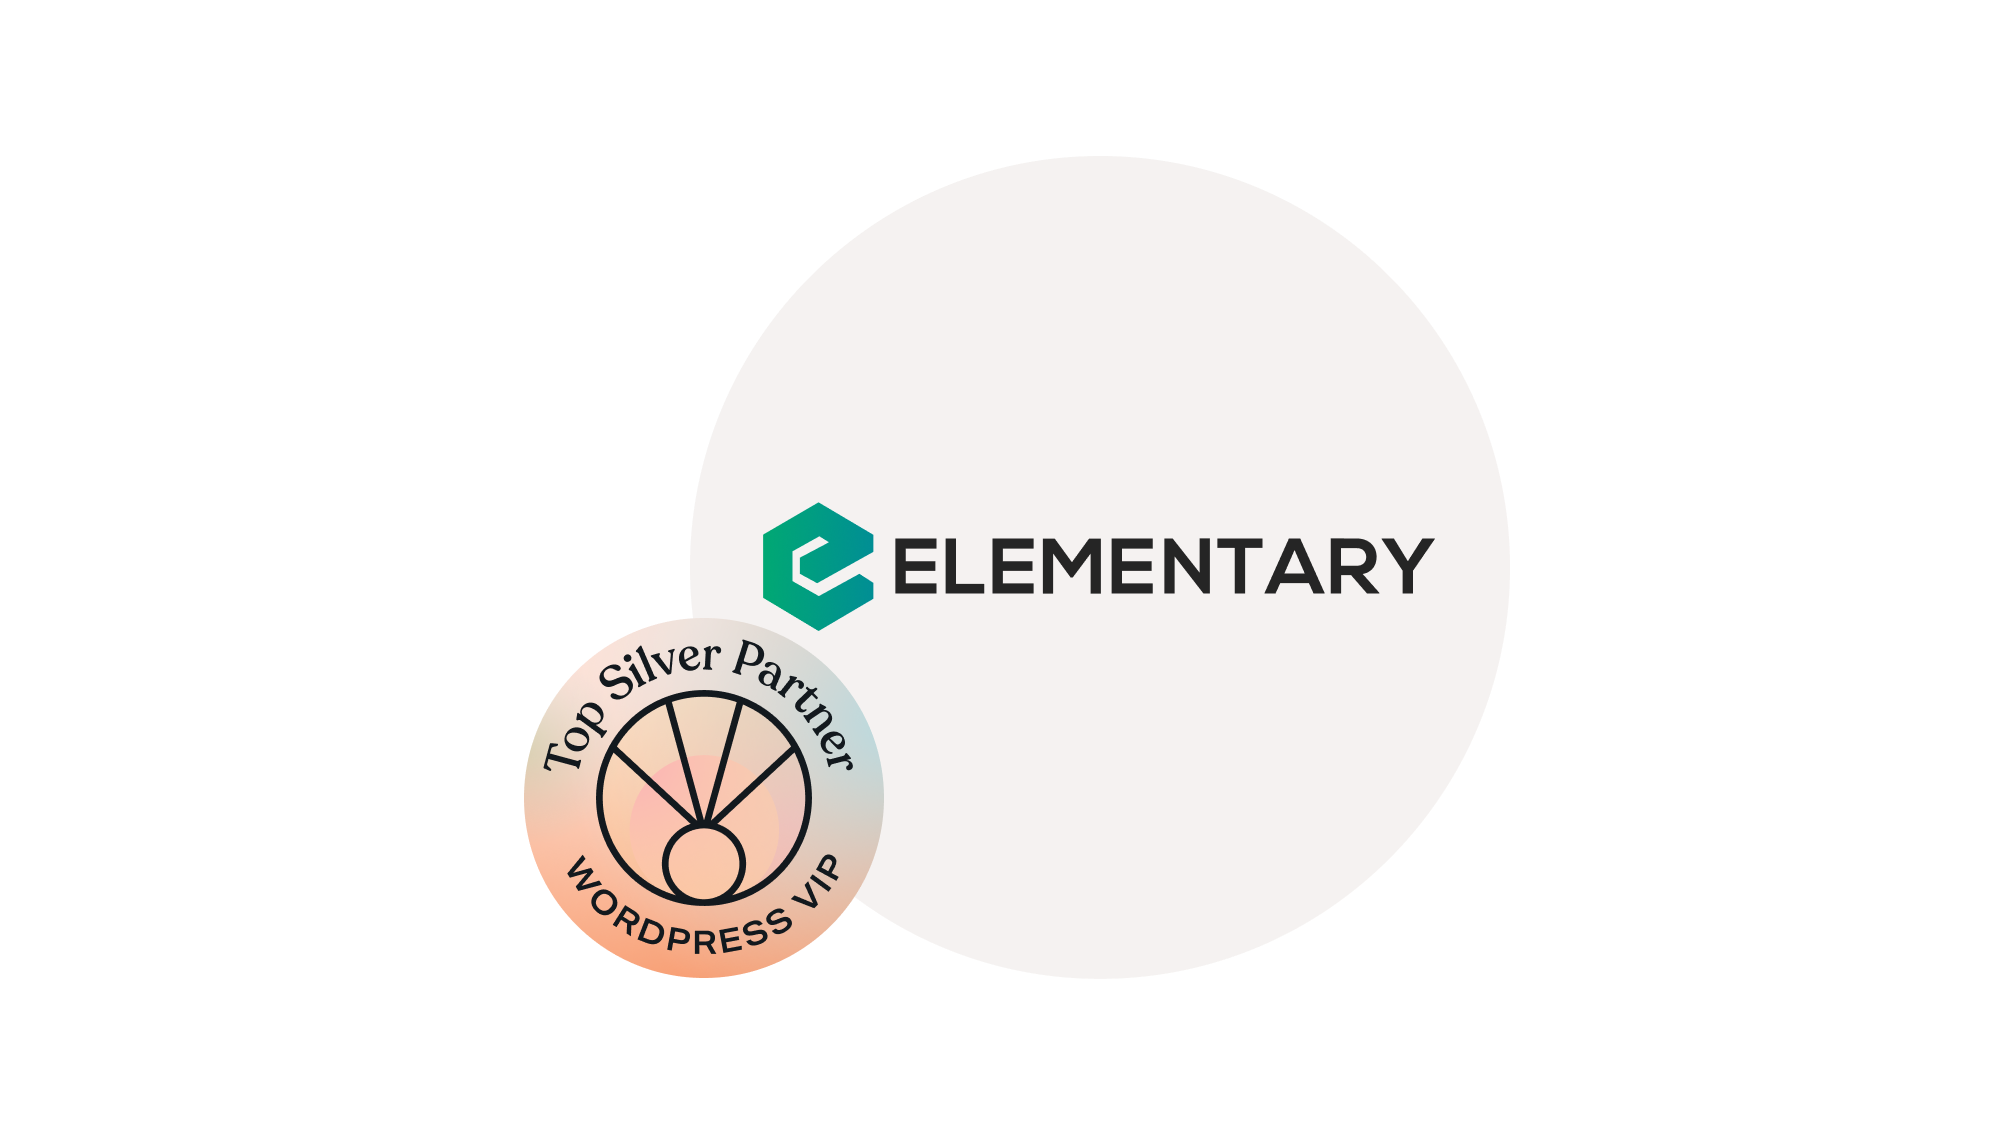 Elementary Digital logo with Top Silver Partner Award badge